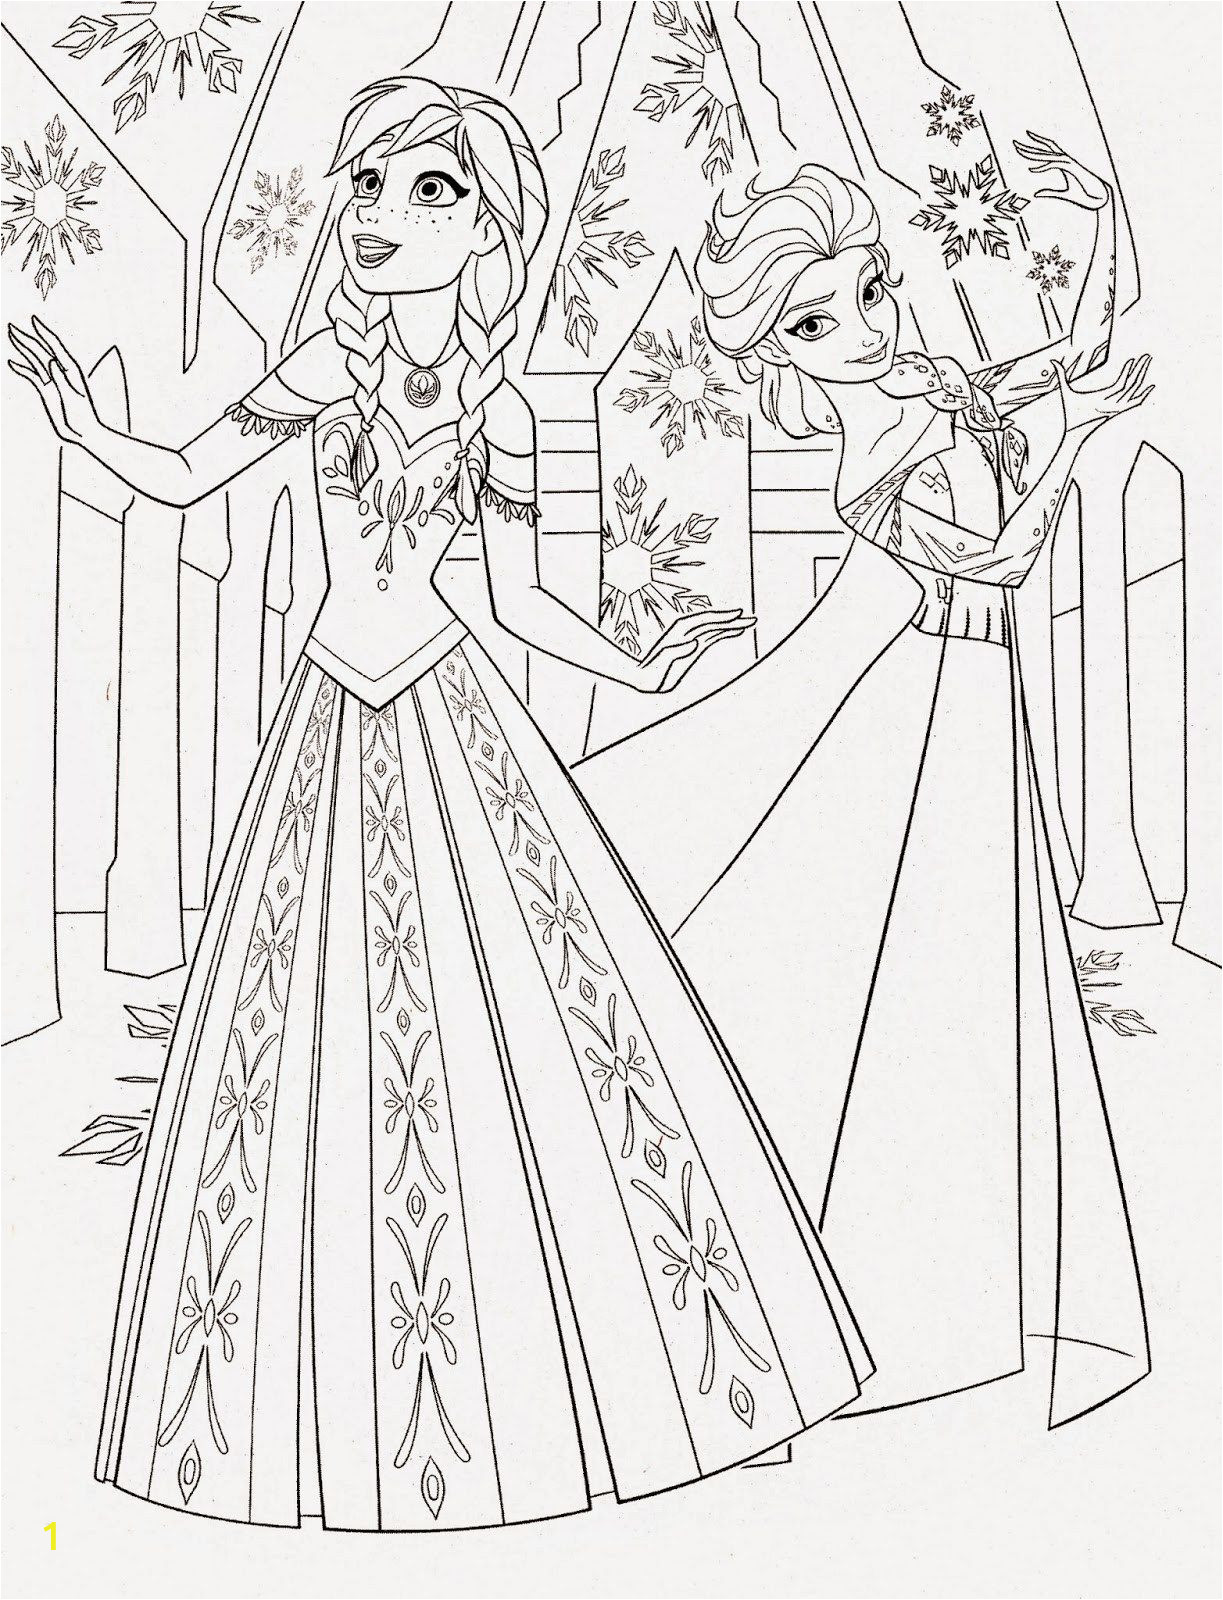 Disney Princess Elsa Coloring Pages Disney Princess Frozen Elsa and Anna Coloring Pages